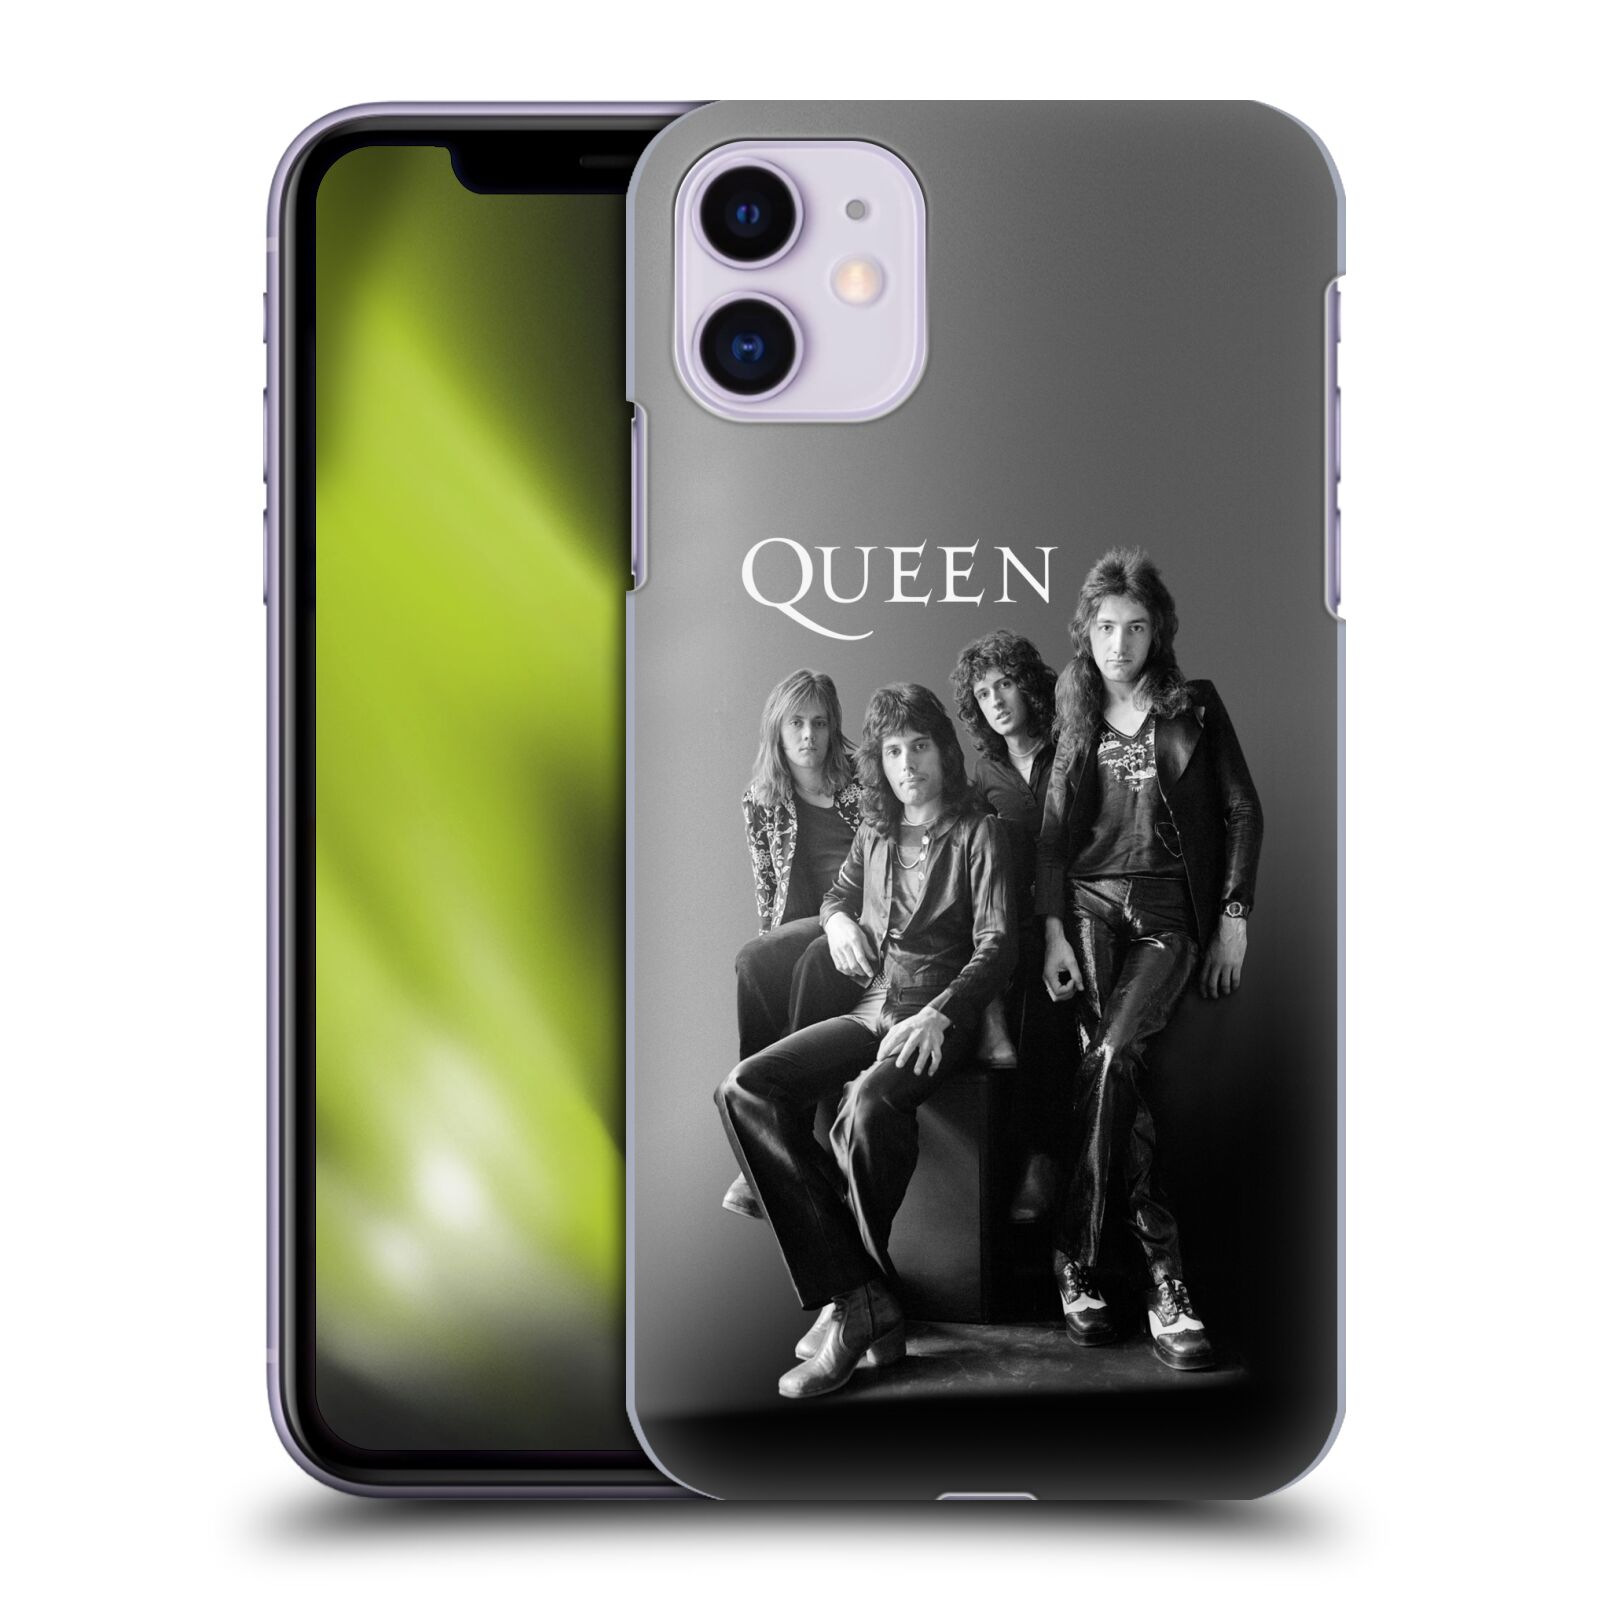 Plastové pouzdro na mobil Apple iPhone 11 - Head Case - Queen - Skupina